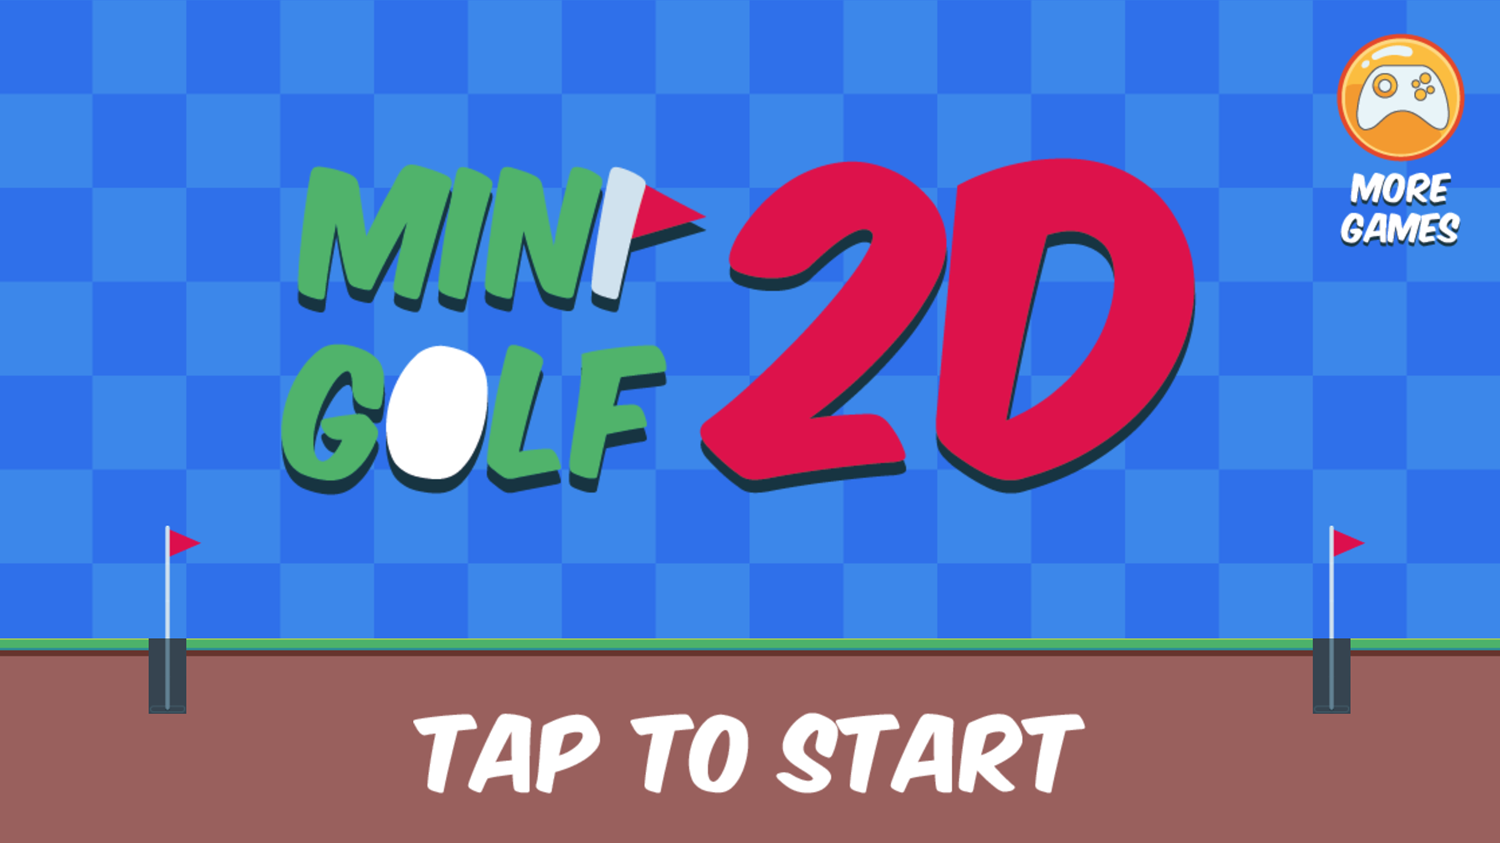 Mini Golf 2D Welcome Screen Screenshot.